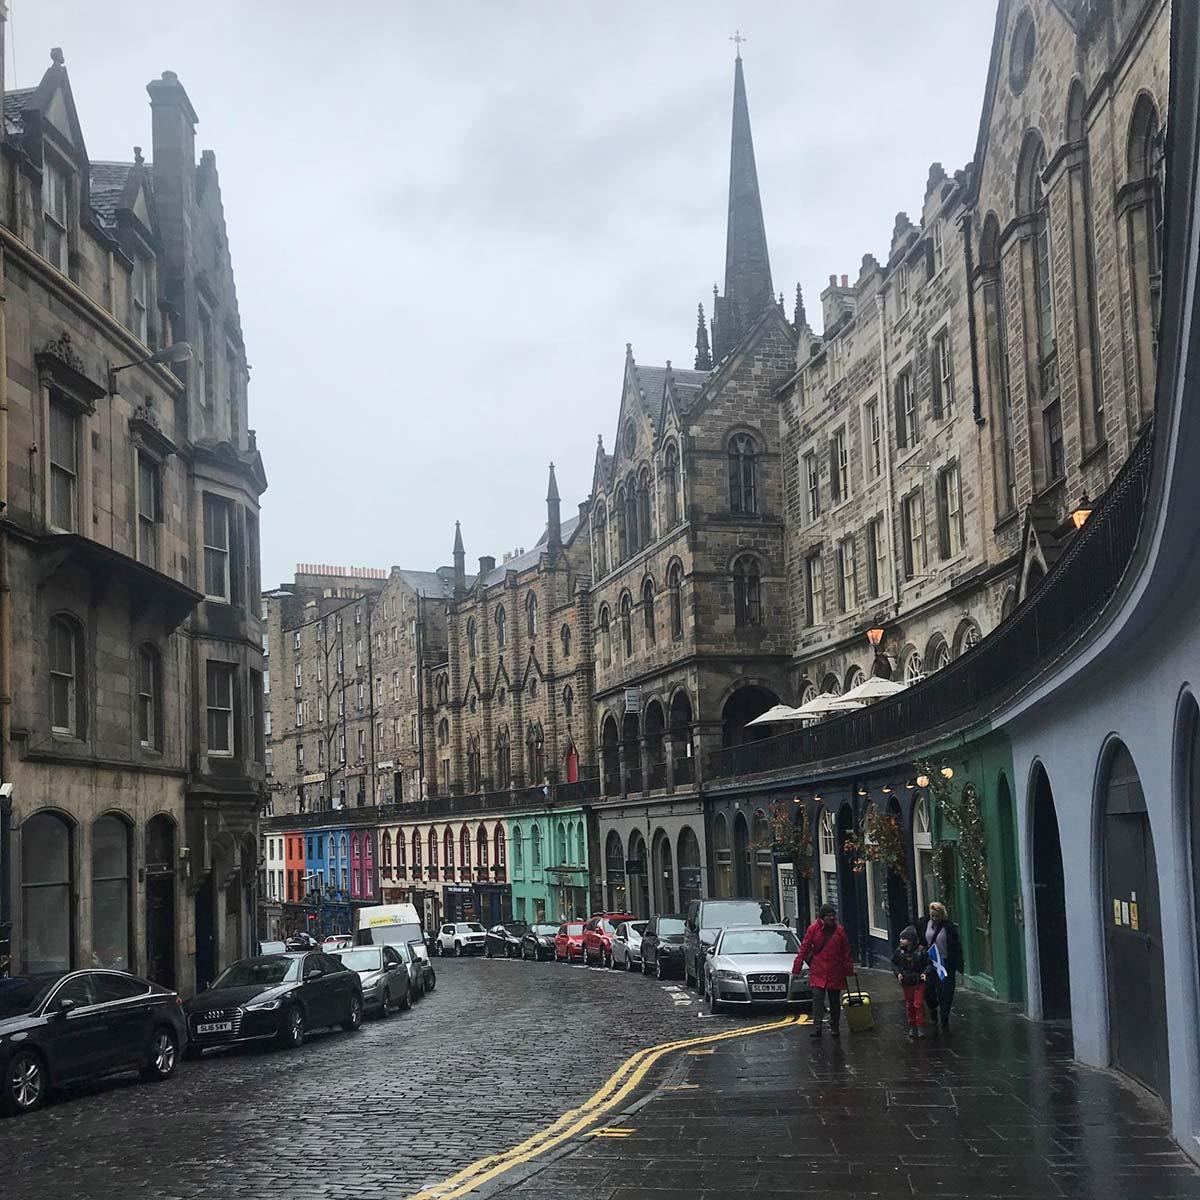 Victoria Street in Edinburgh